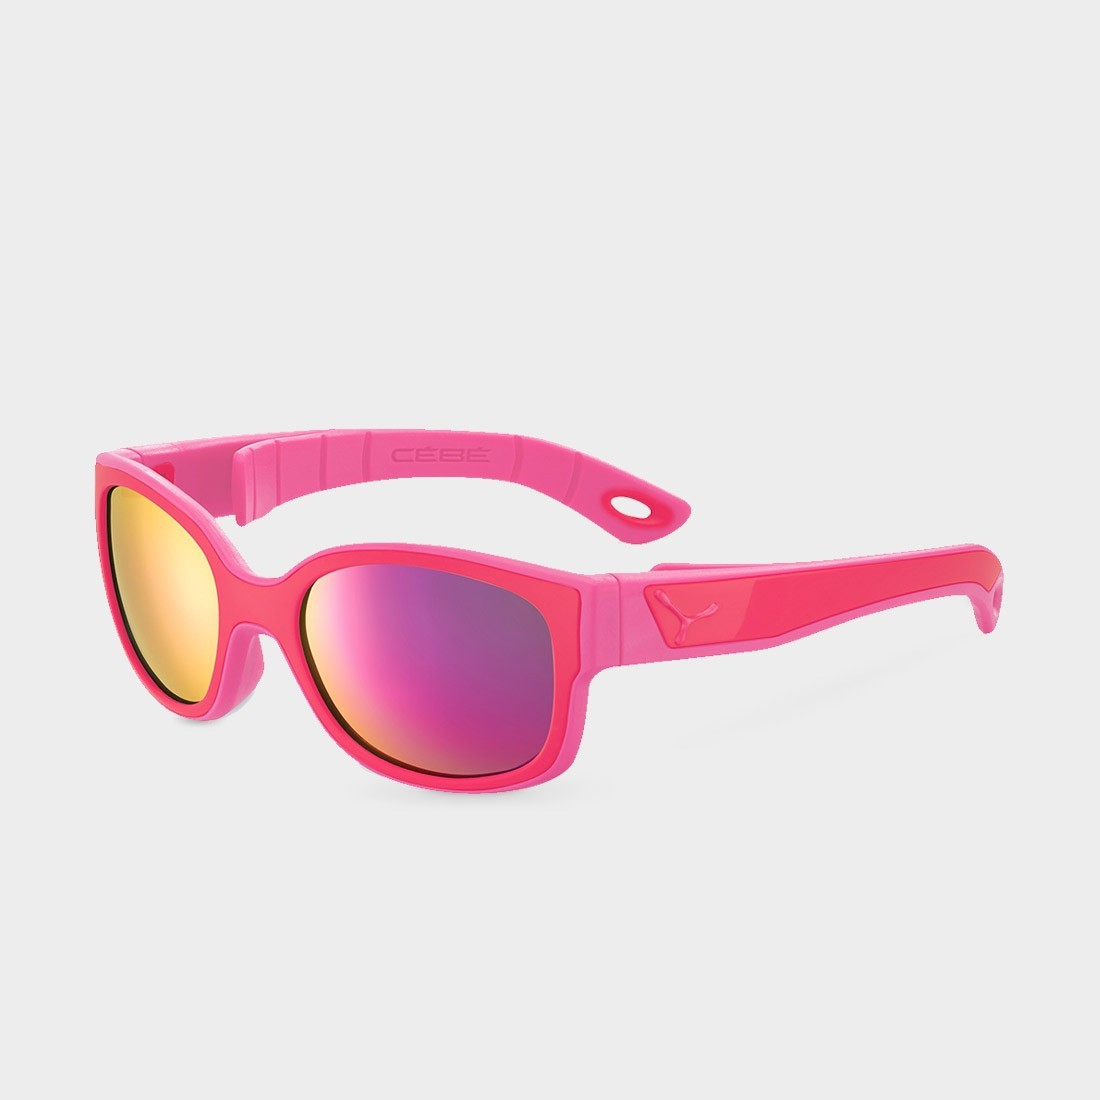 Cebe S-Pies Kids Sunglasses (Pink)